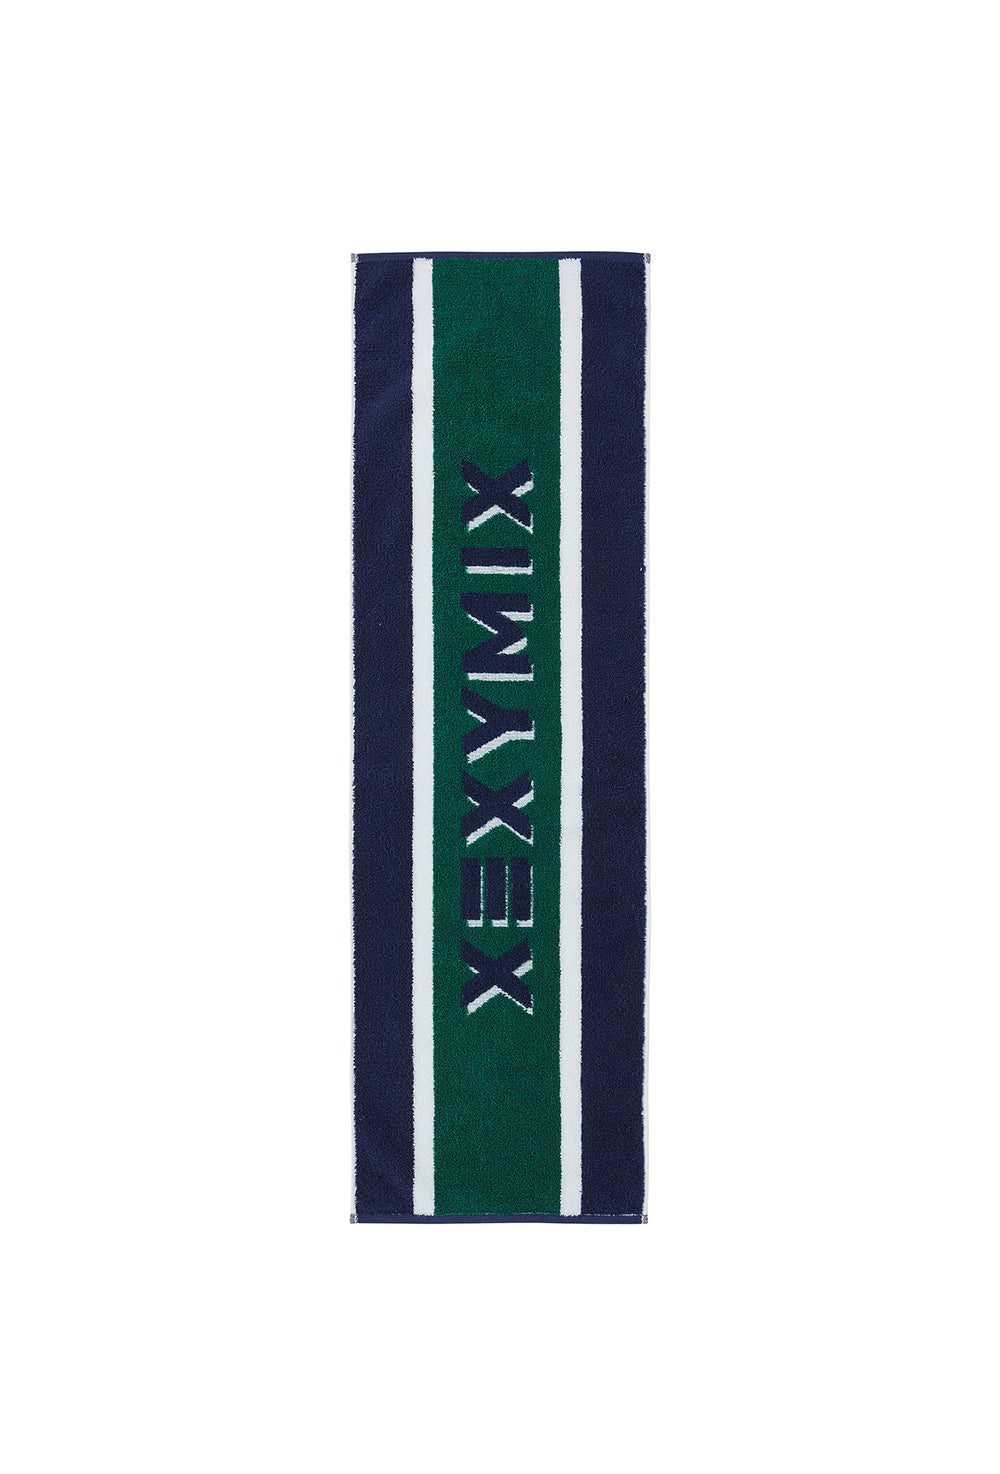 XEXYMIX Play Towel - Bijou Navy